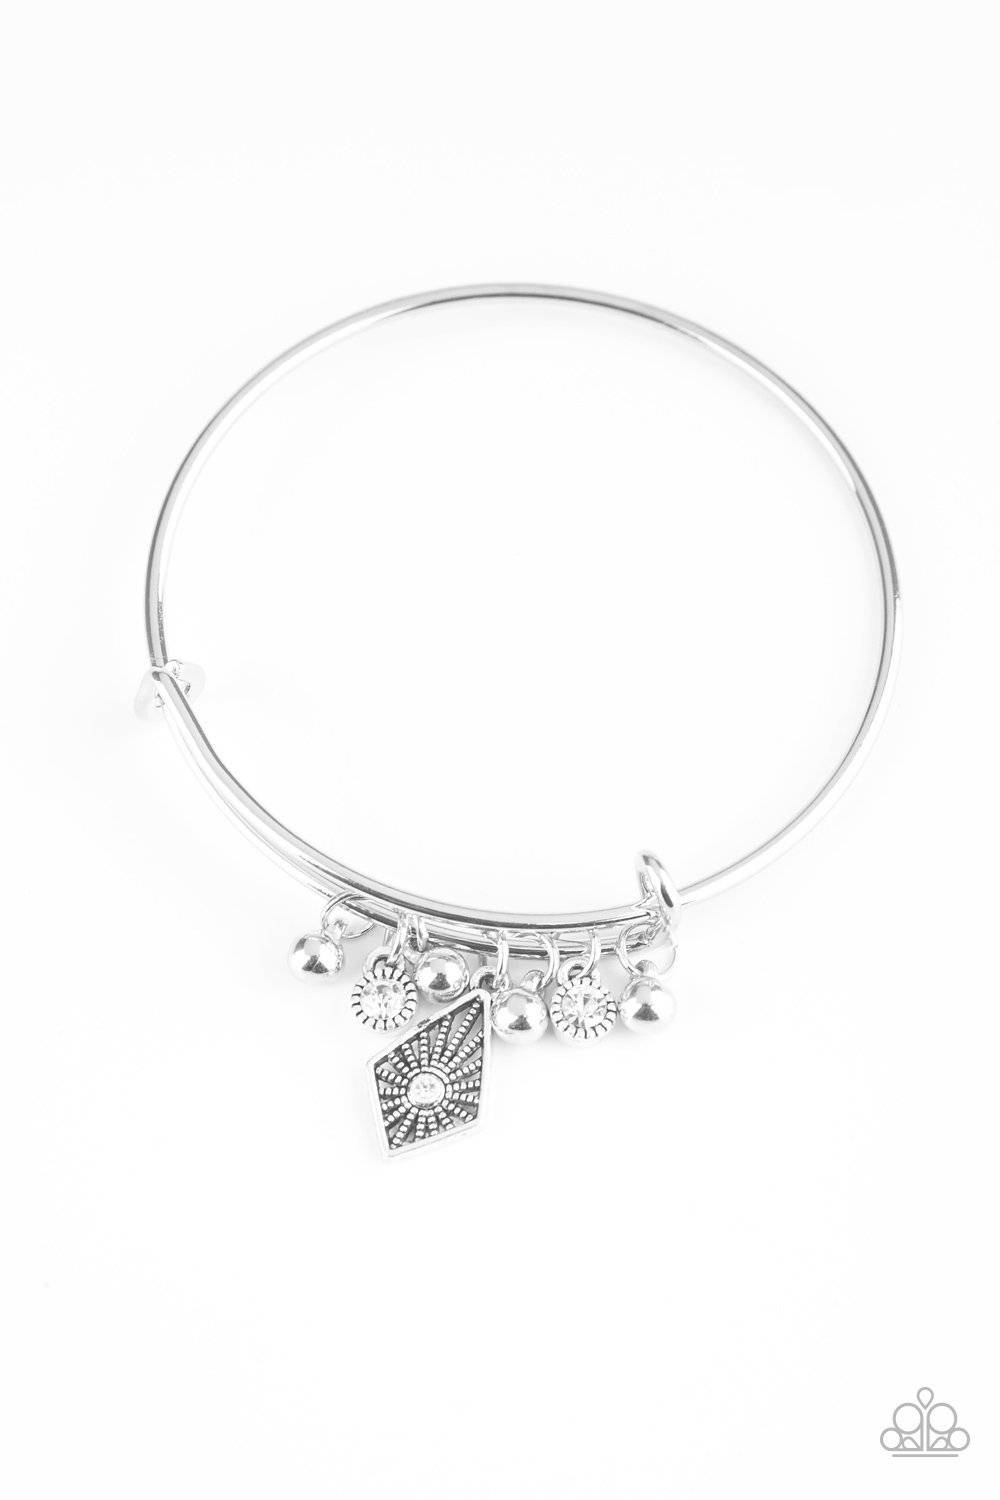 B248 - Treasure Charms Bracelet by Paparazzi Accessories on Fancy5Fashion.com